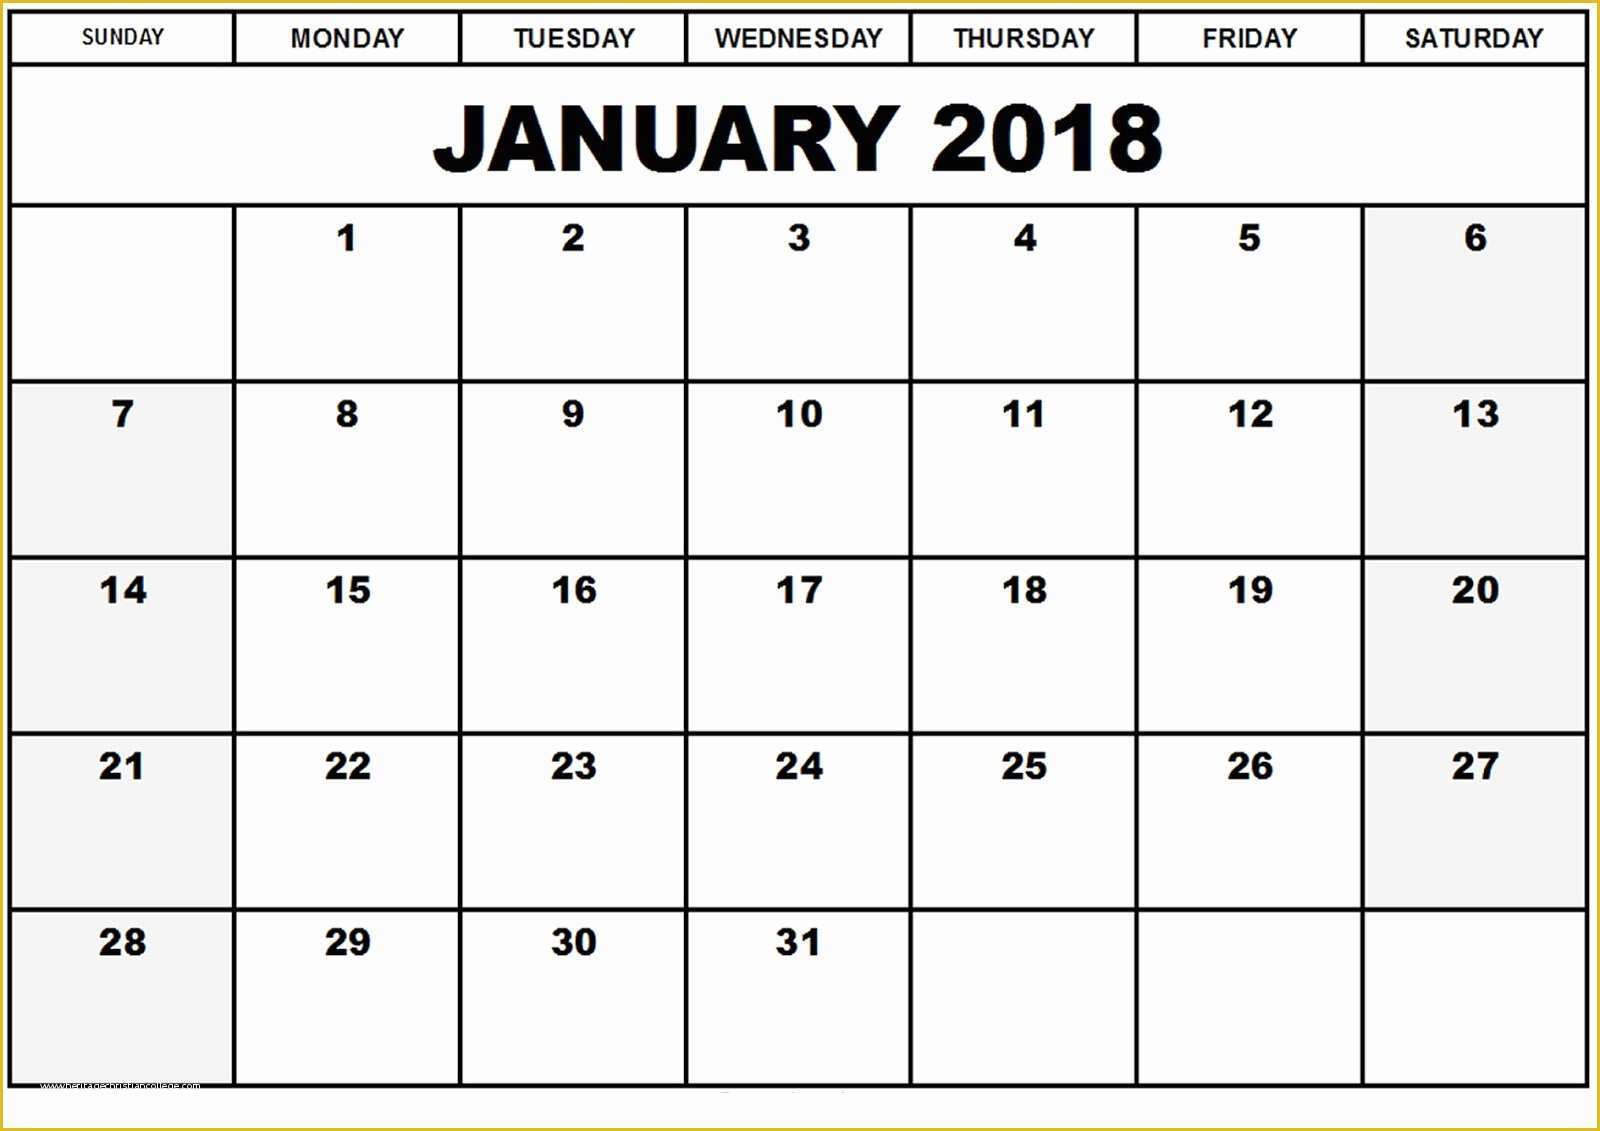 Free Downloadable Calendar Template Of Printable Calendar 2018 [free] January 2018 Printable